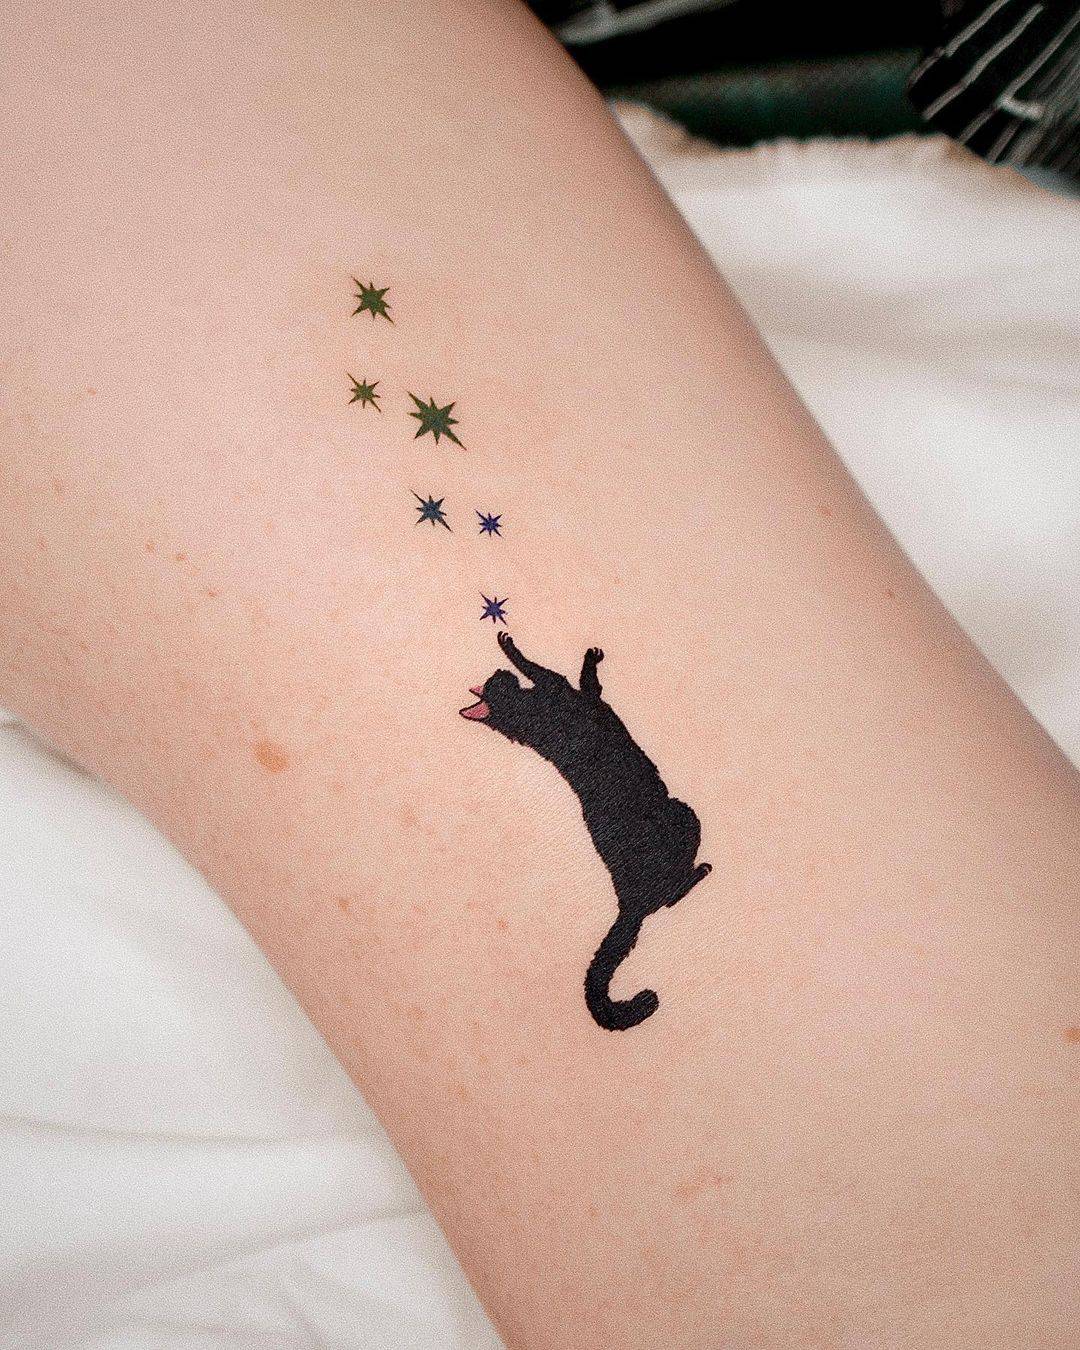 Star tattoo design by youngchickentattoo